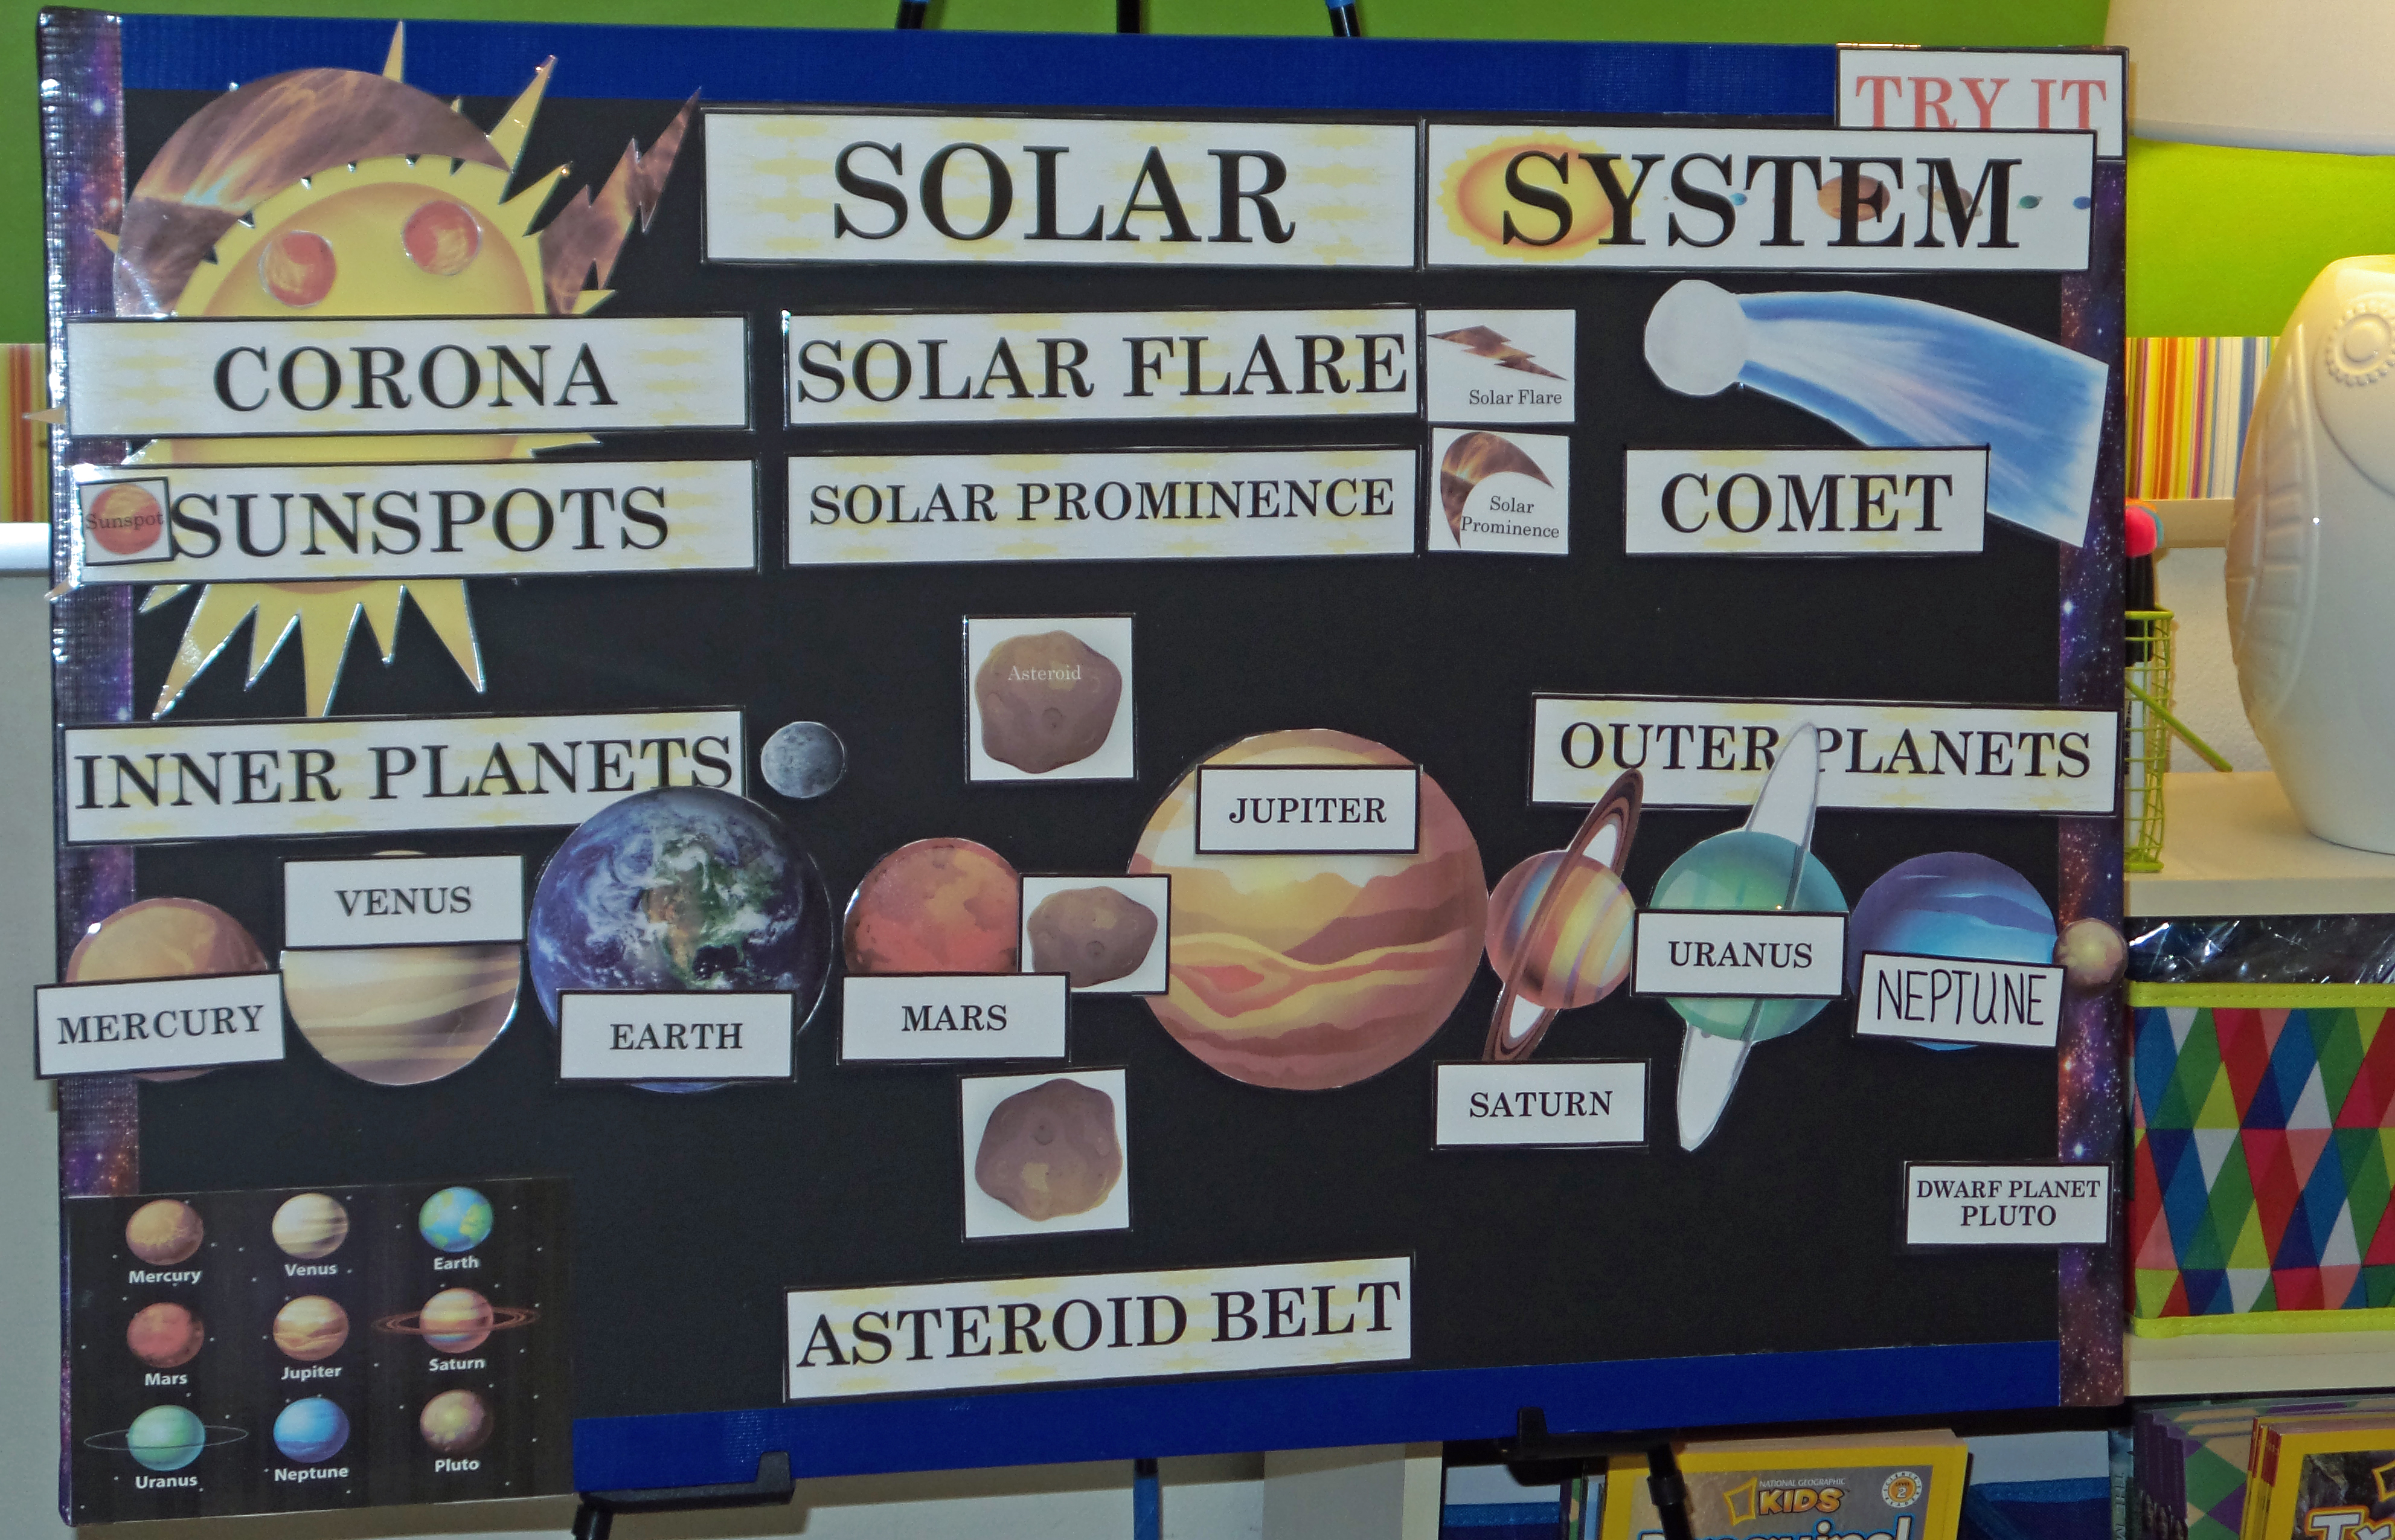 Solar System Anchor Chart